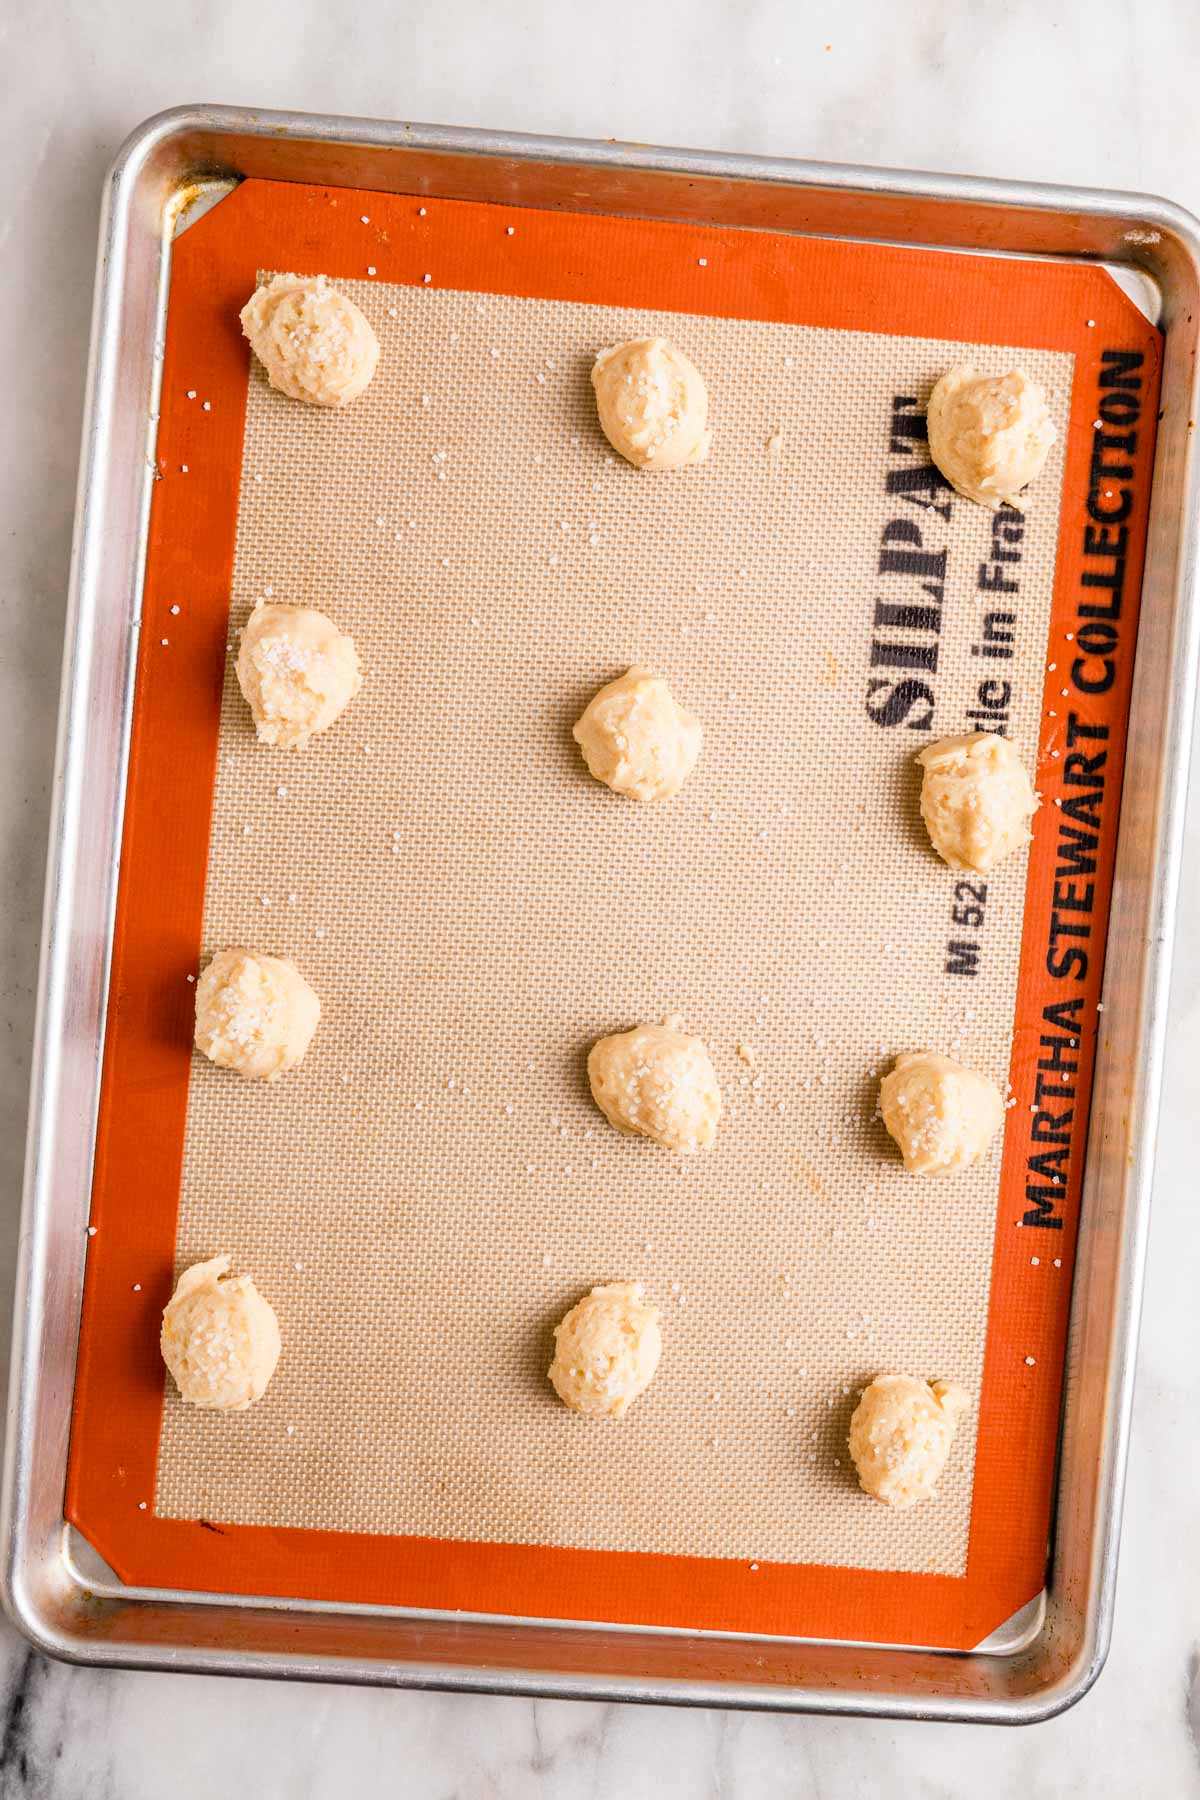 Amish Sugar Cookies dough balls on silpat on baking sheet before baking